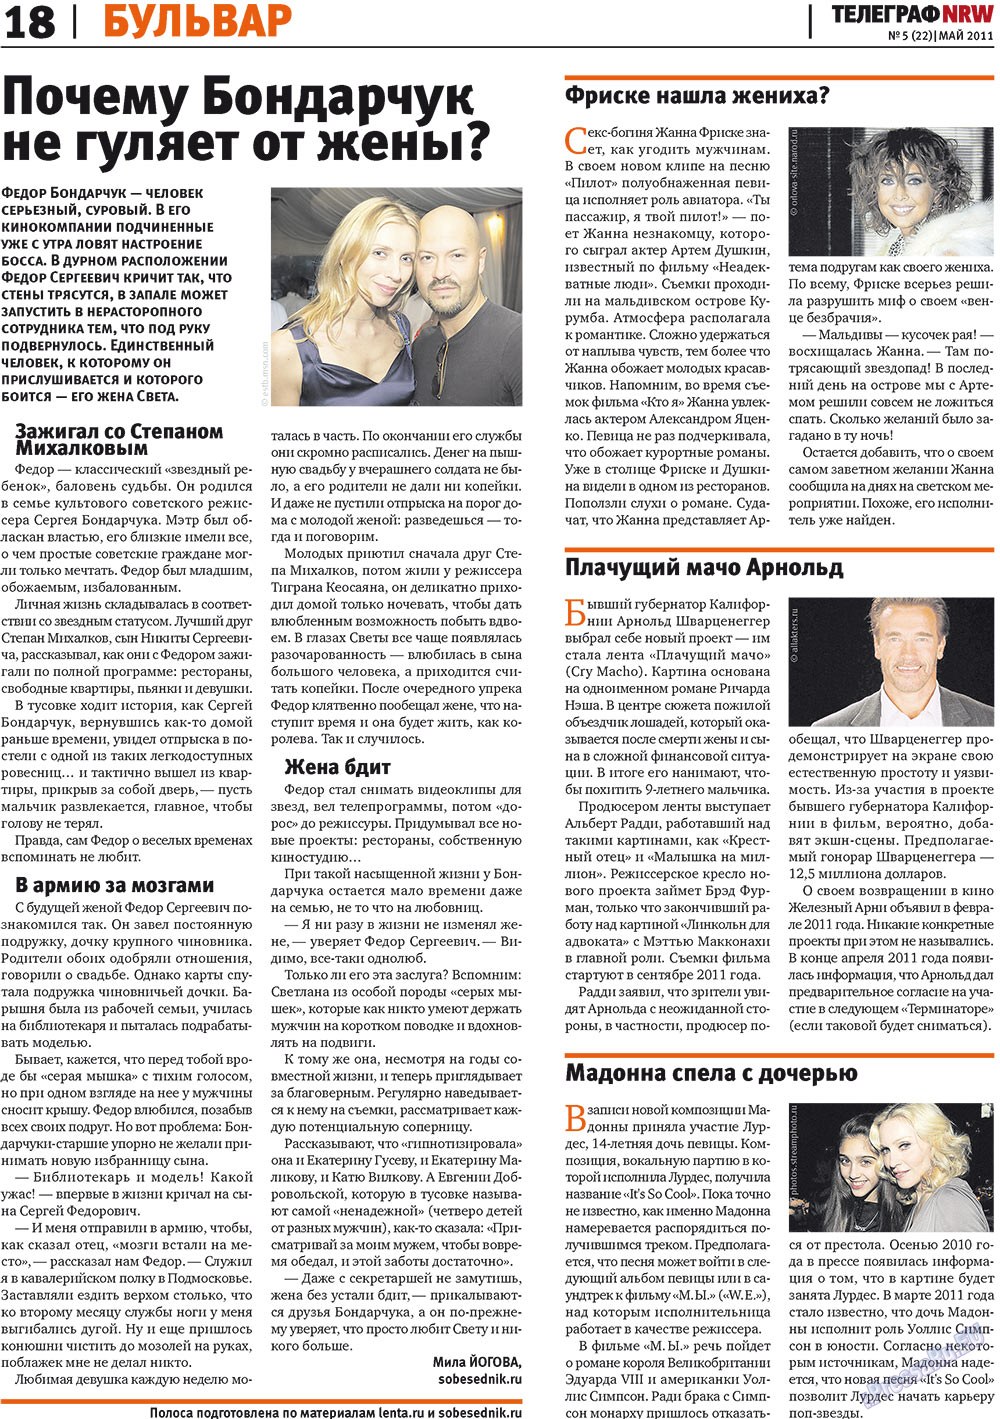 Телеграф NRW, газета. 2011 №5 стр.18